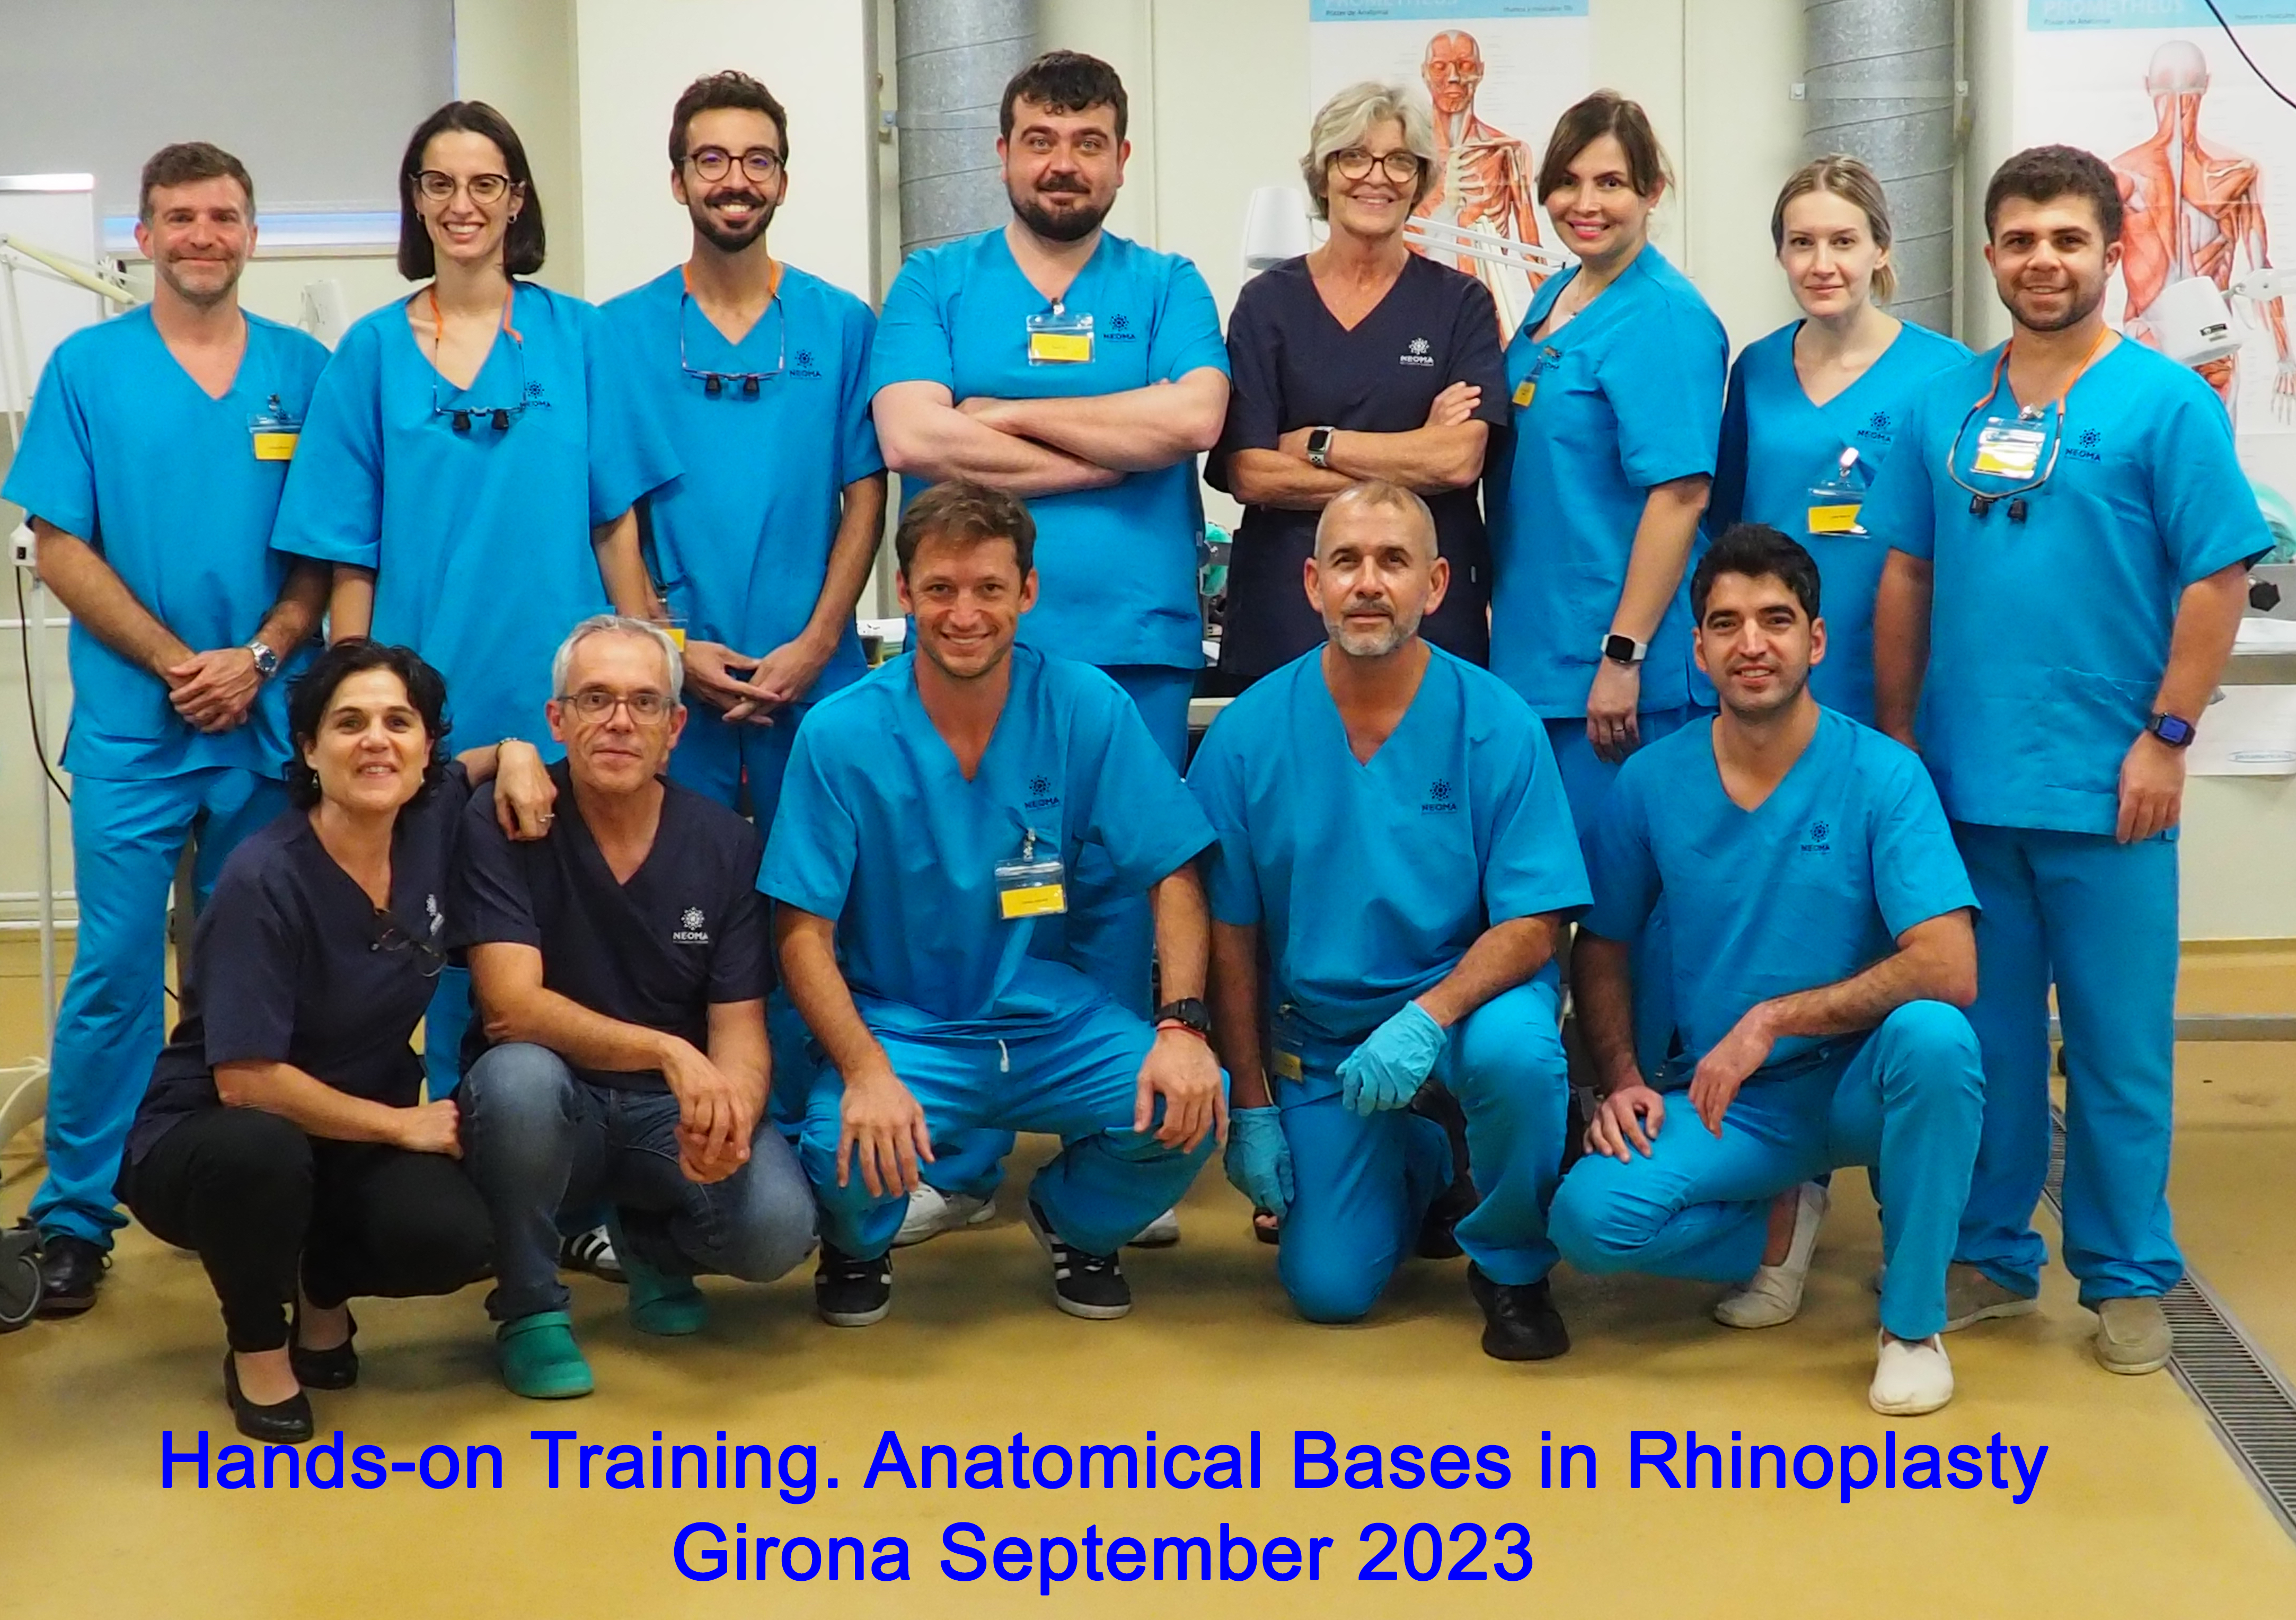 Anatomical bases in rhinoplasty 2023